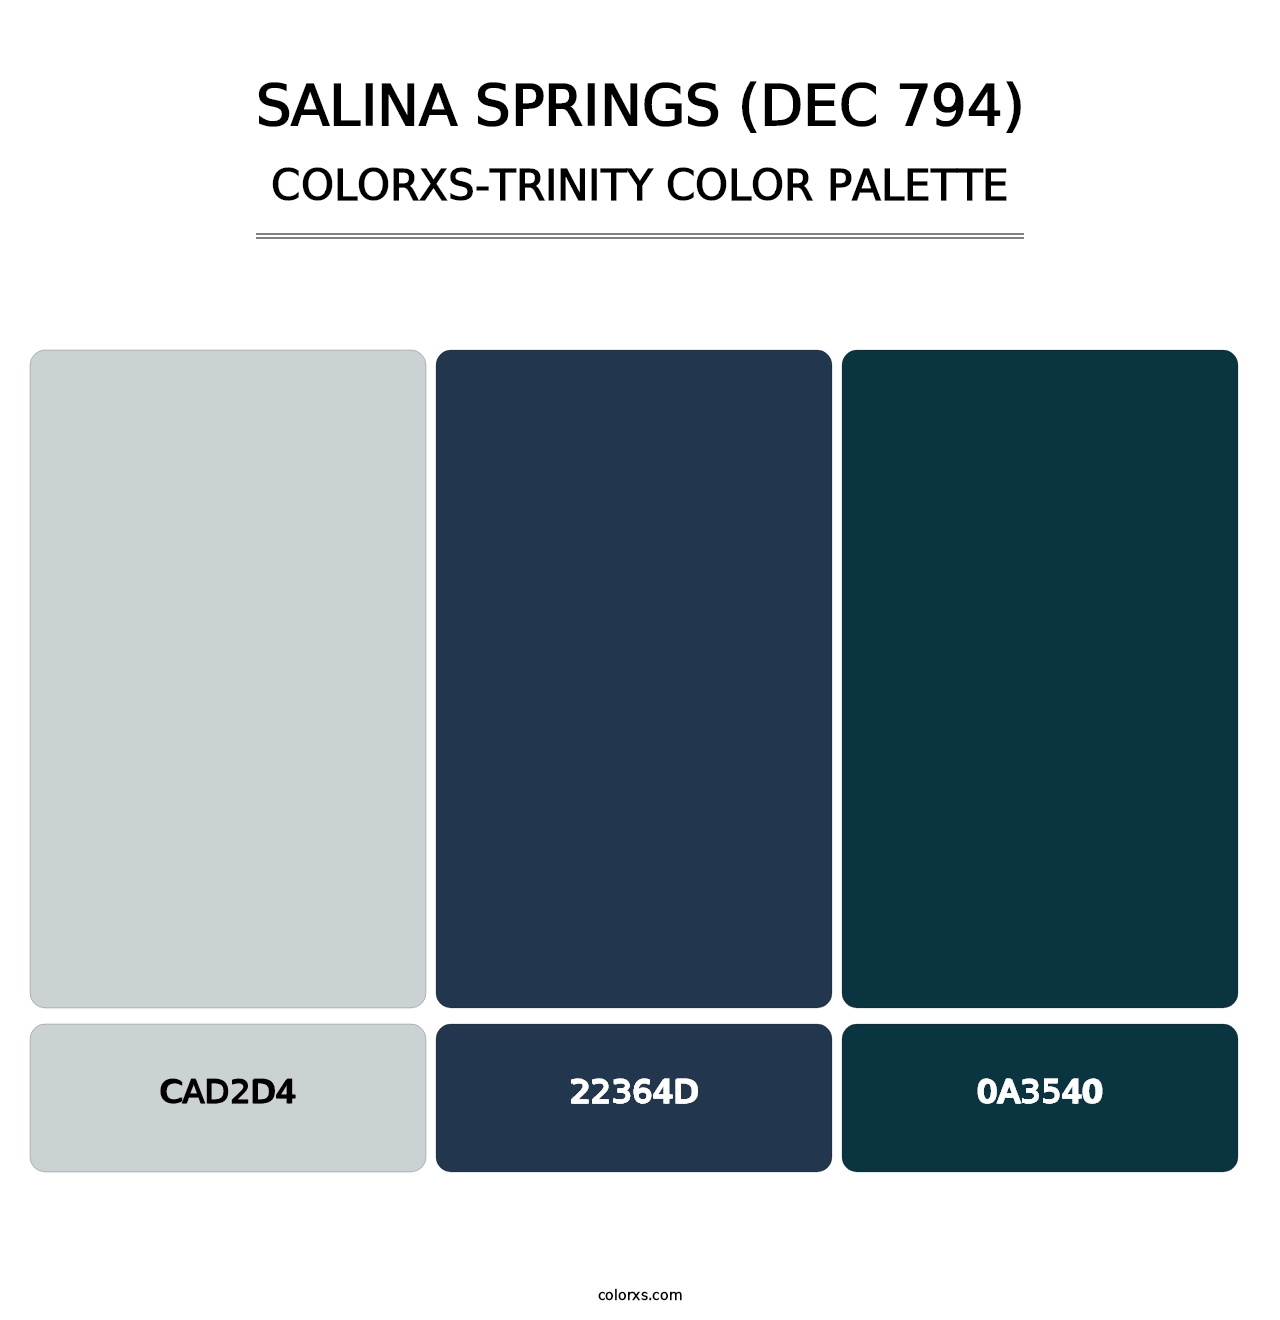 Salina Springs (DEC 794) - Colorxs Trinity Palette